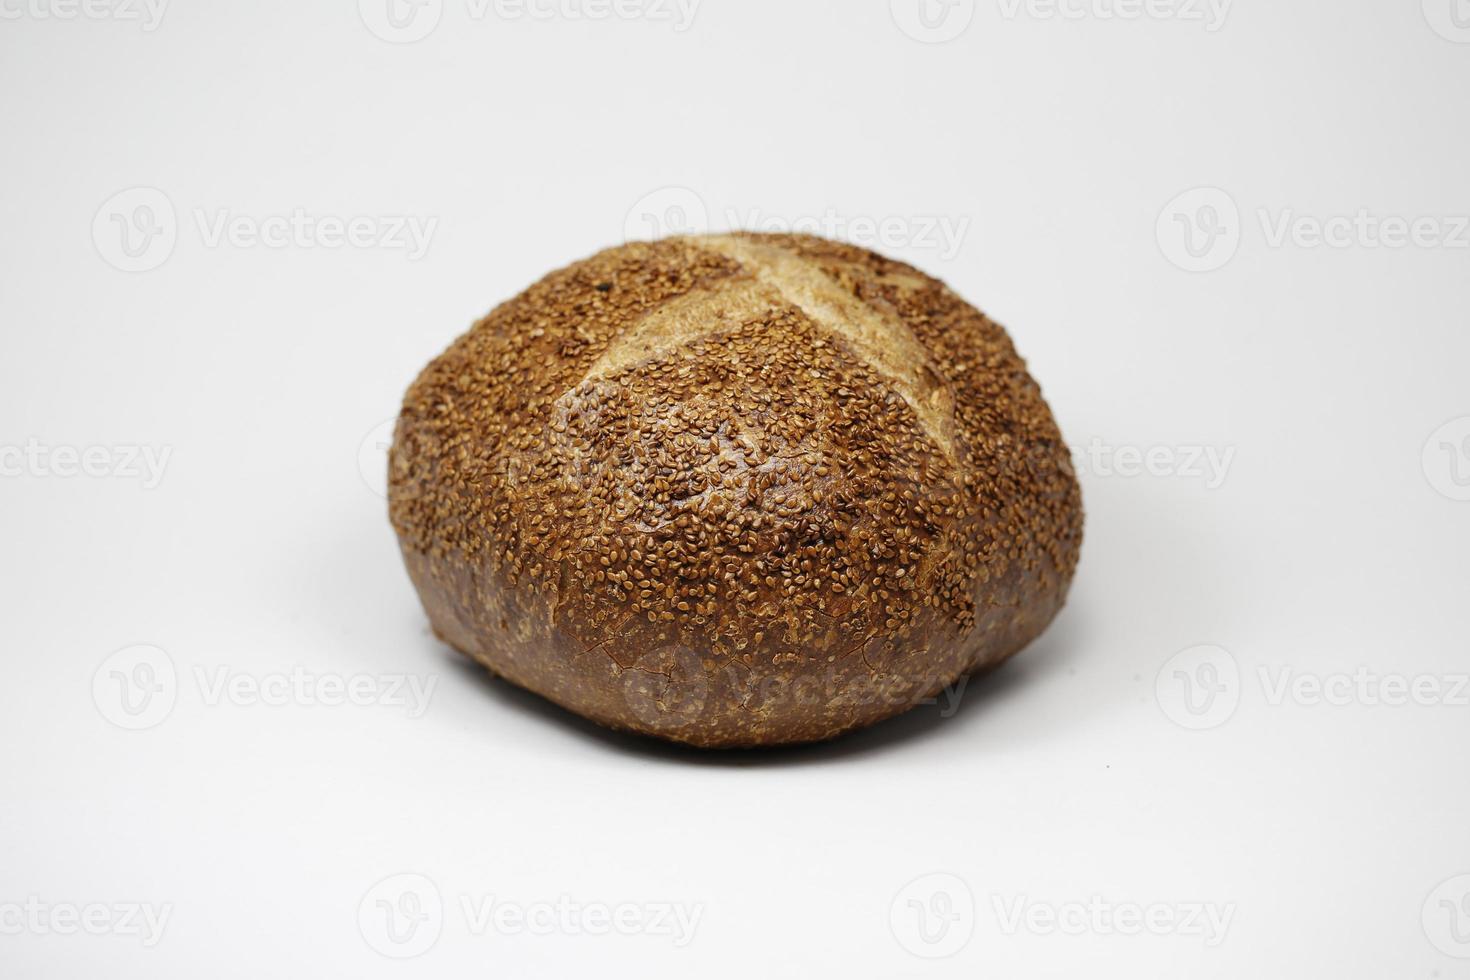 Walnut Bread, Bakery Products, Pastry and Bakery photo